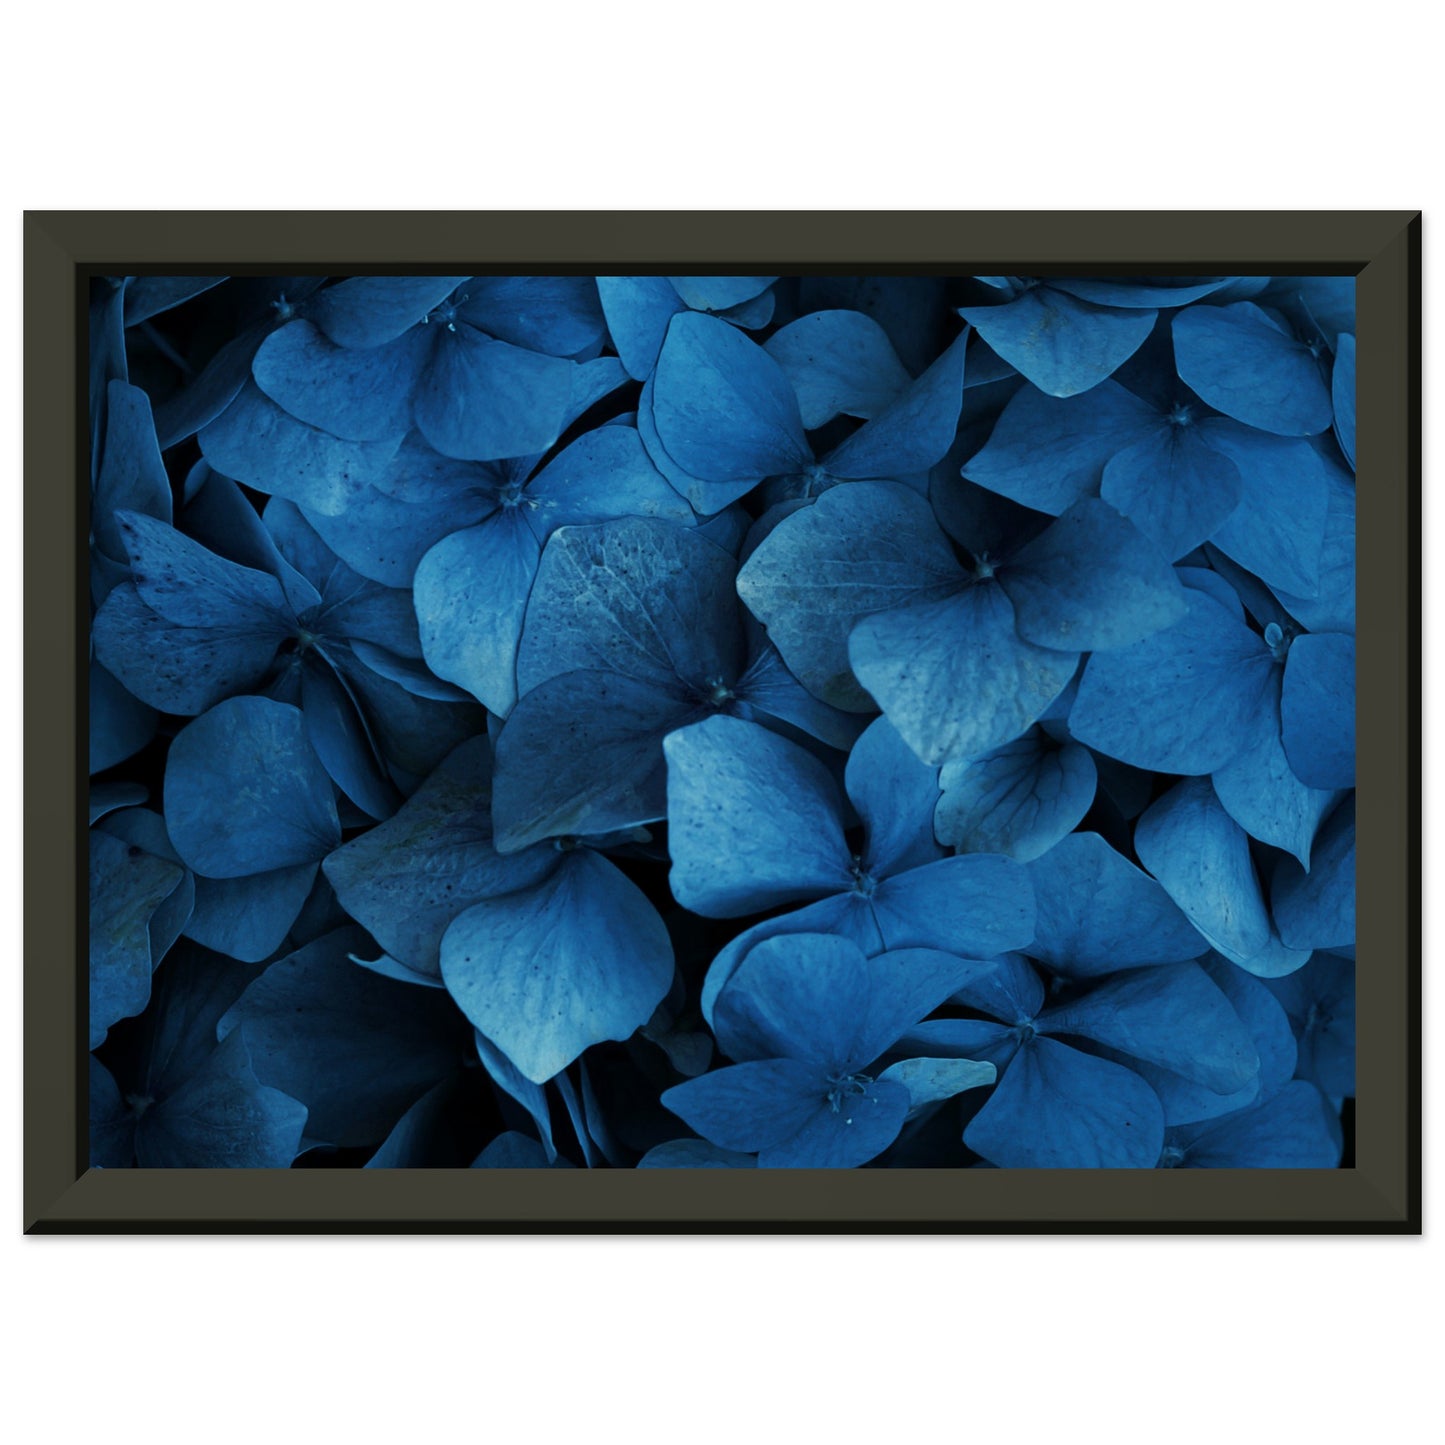 Blue hydrangeas